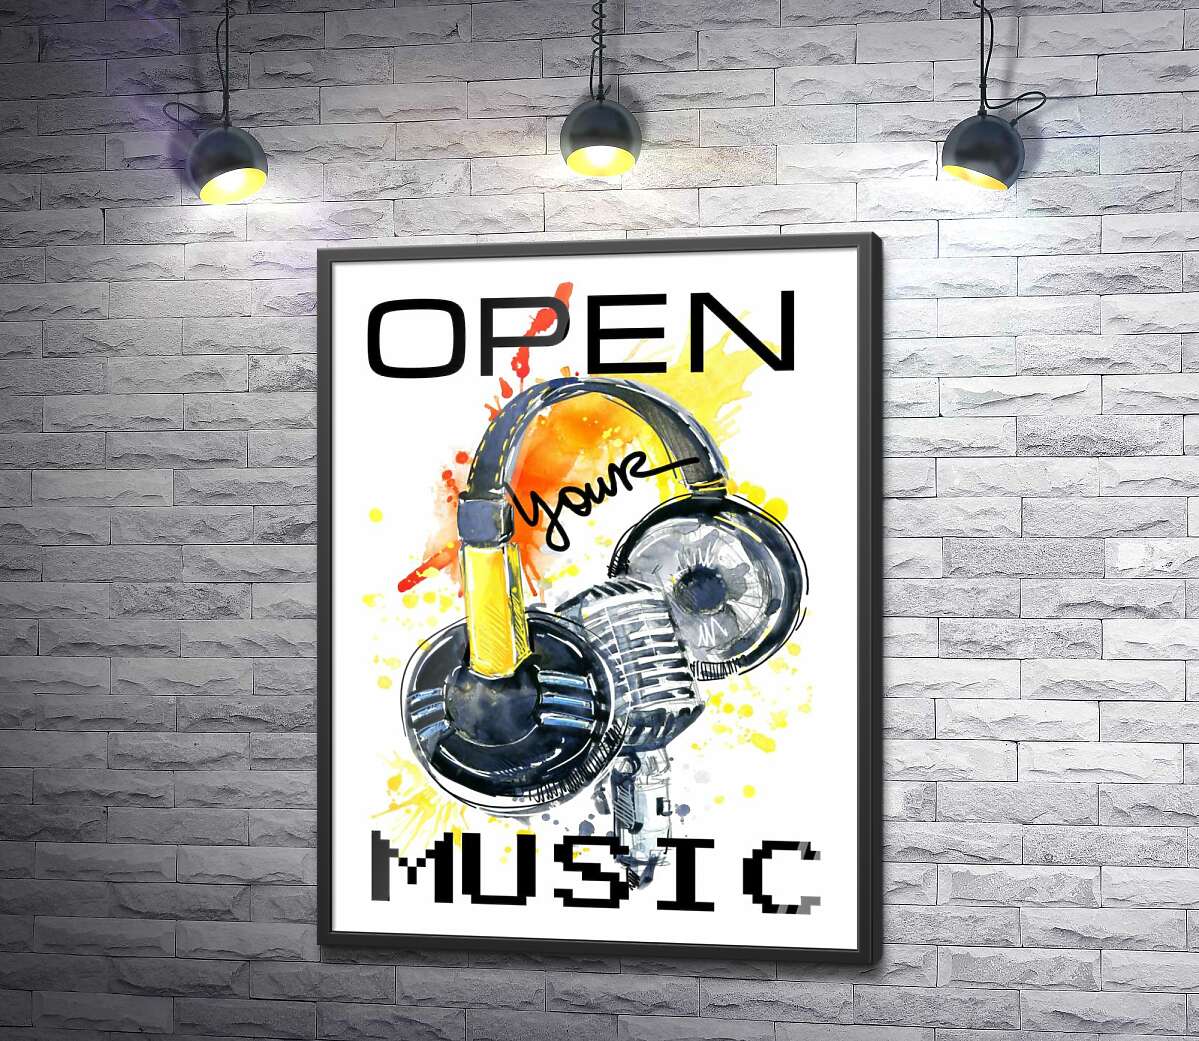 постер Навушники та мікрофон на помаранчевому фоні з написом "open your music"